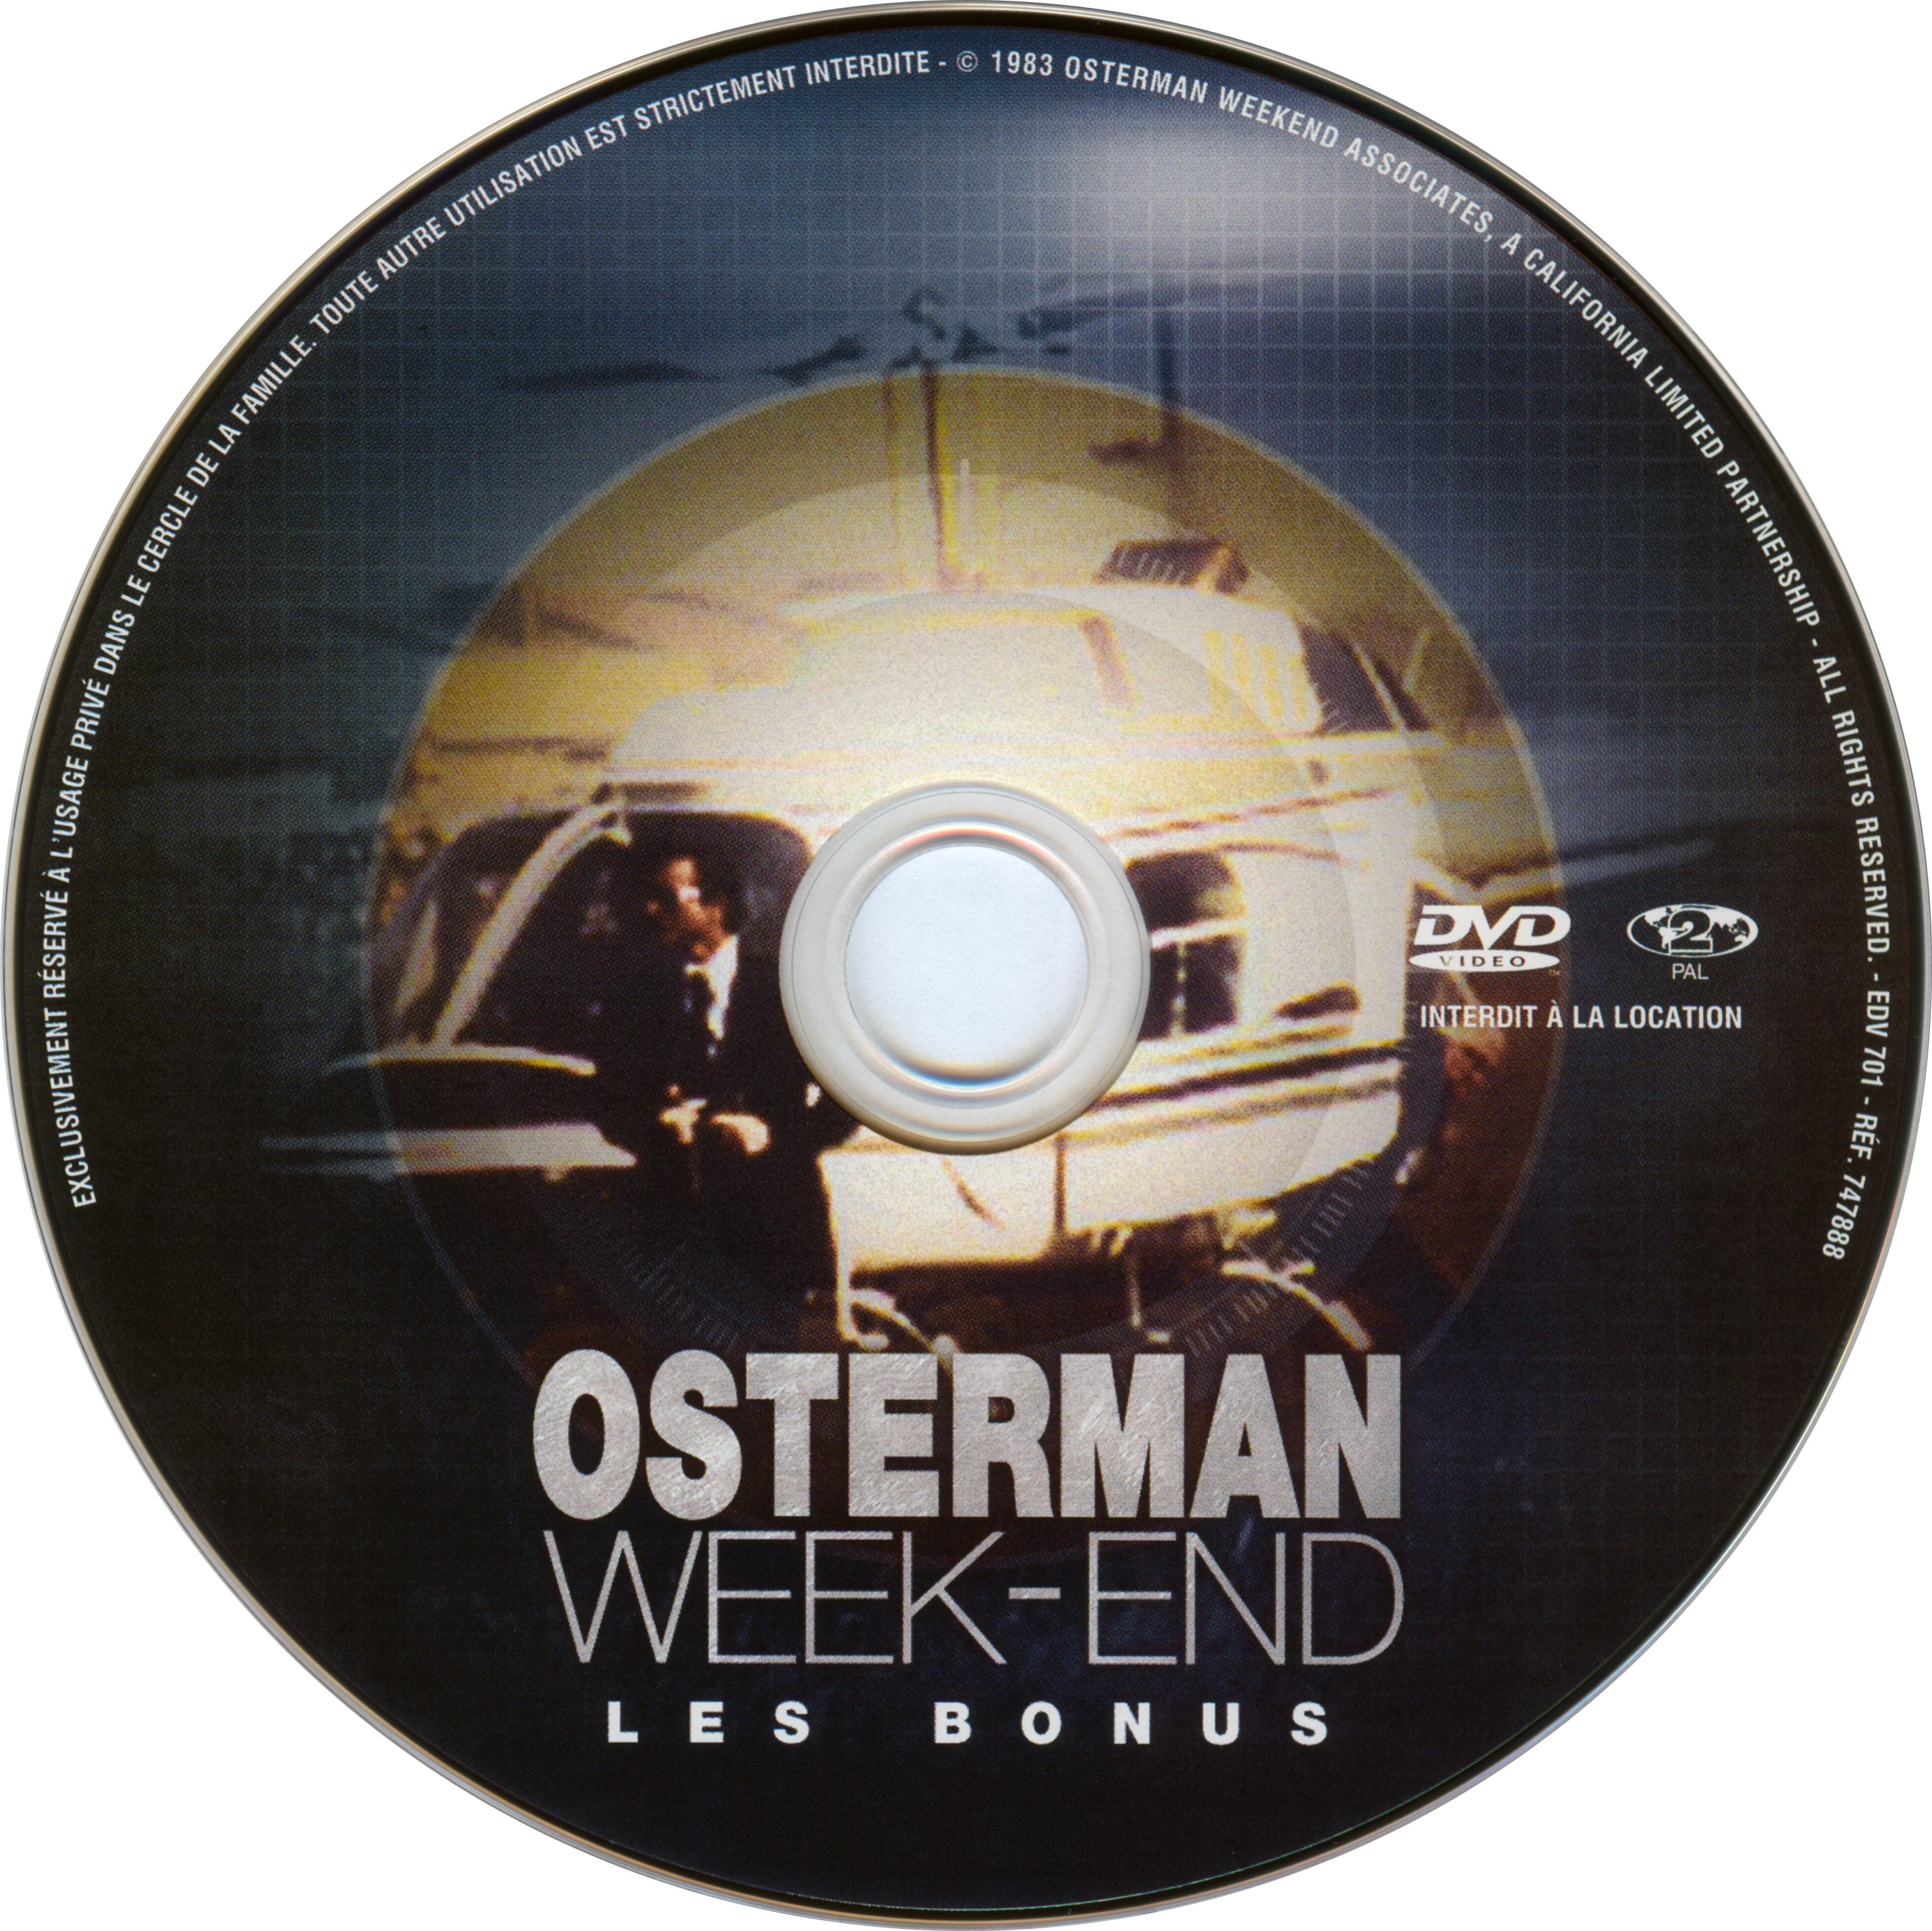 Osterman Week-End DISC 2